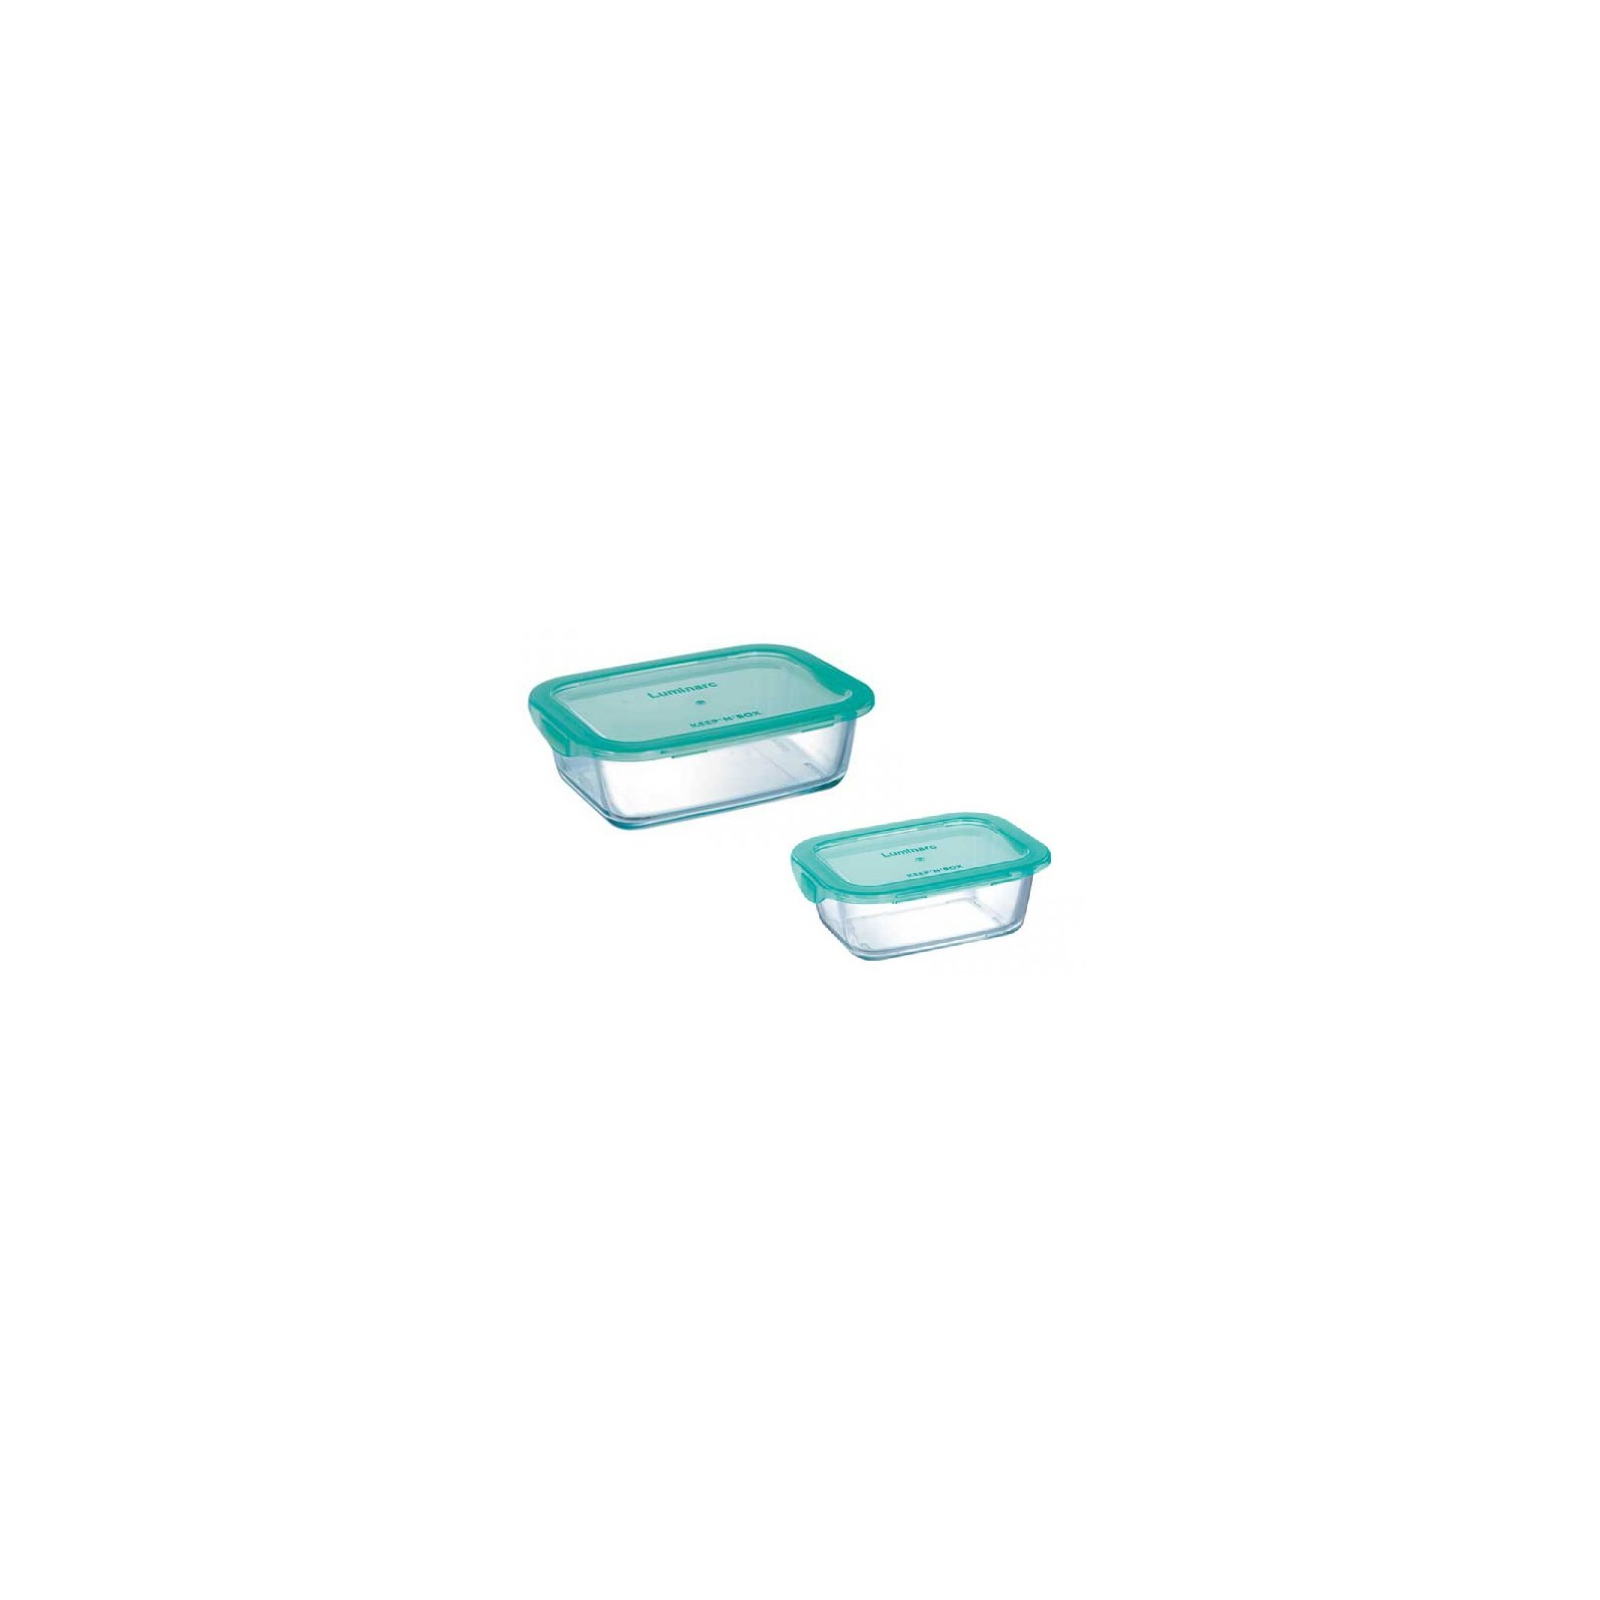 Харчовий контейнер Luminarc Keep'n Box Lagoon набор 2шт прямоуг. 380мл/820мл (P7643)